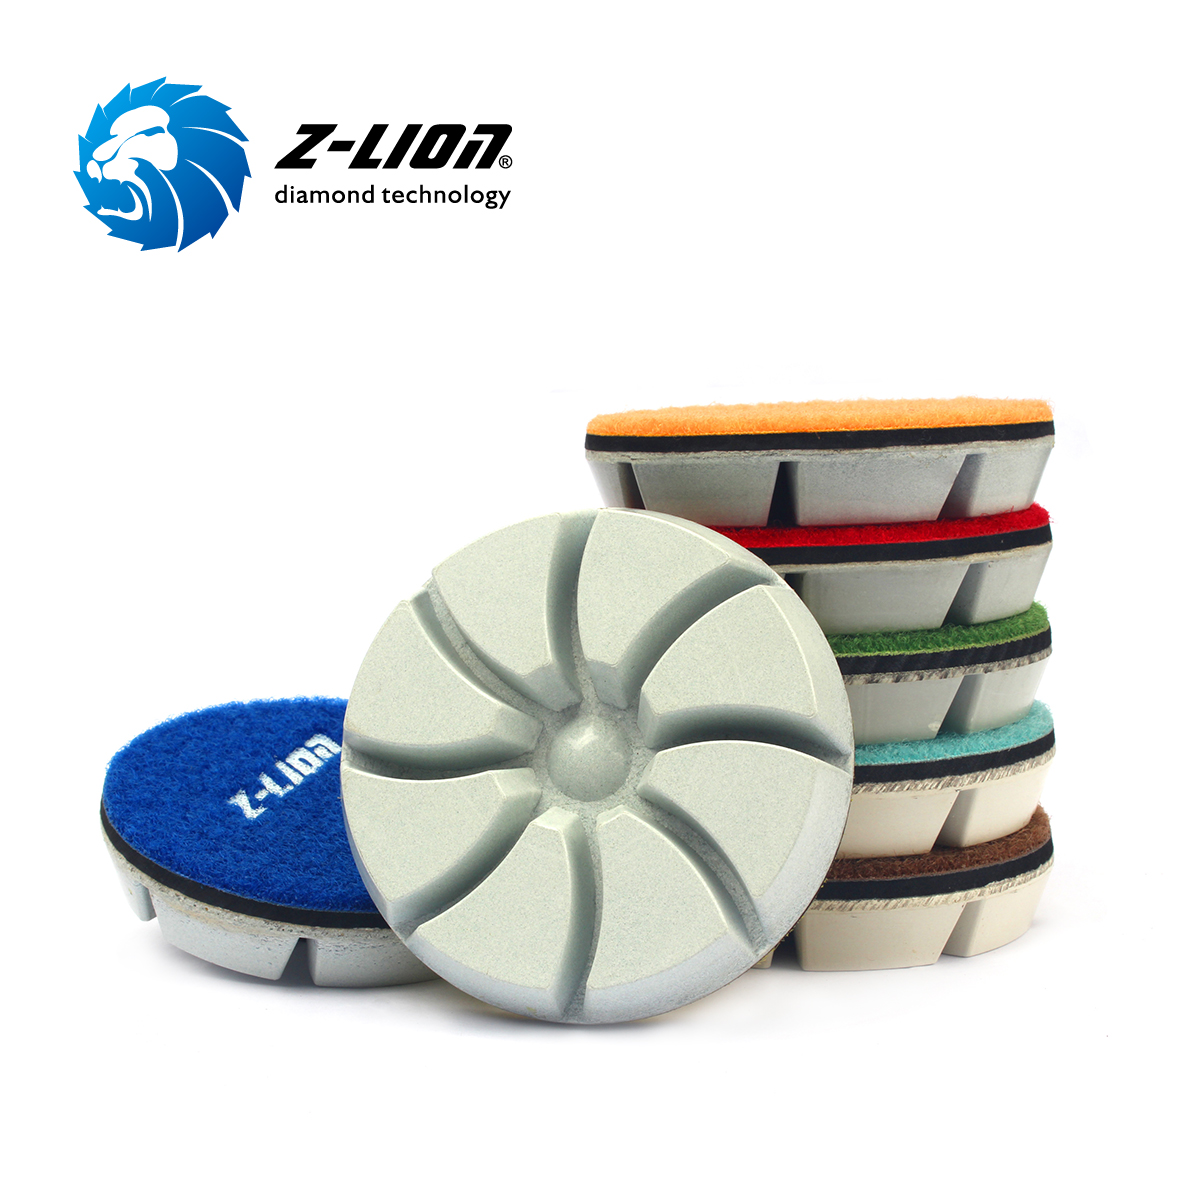 ZL-16KR Turbo pattern dry resin diamond polishing pad for concrete floor polishing